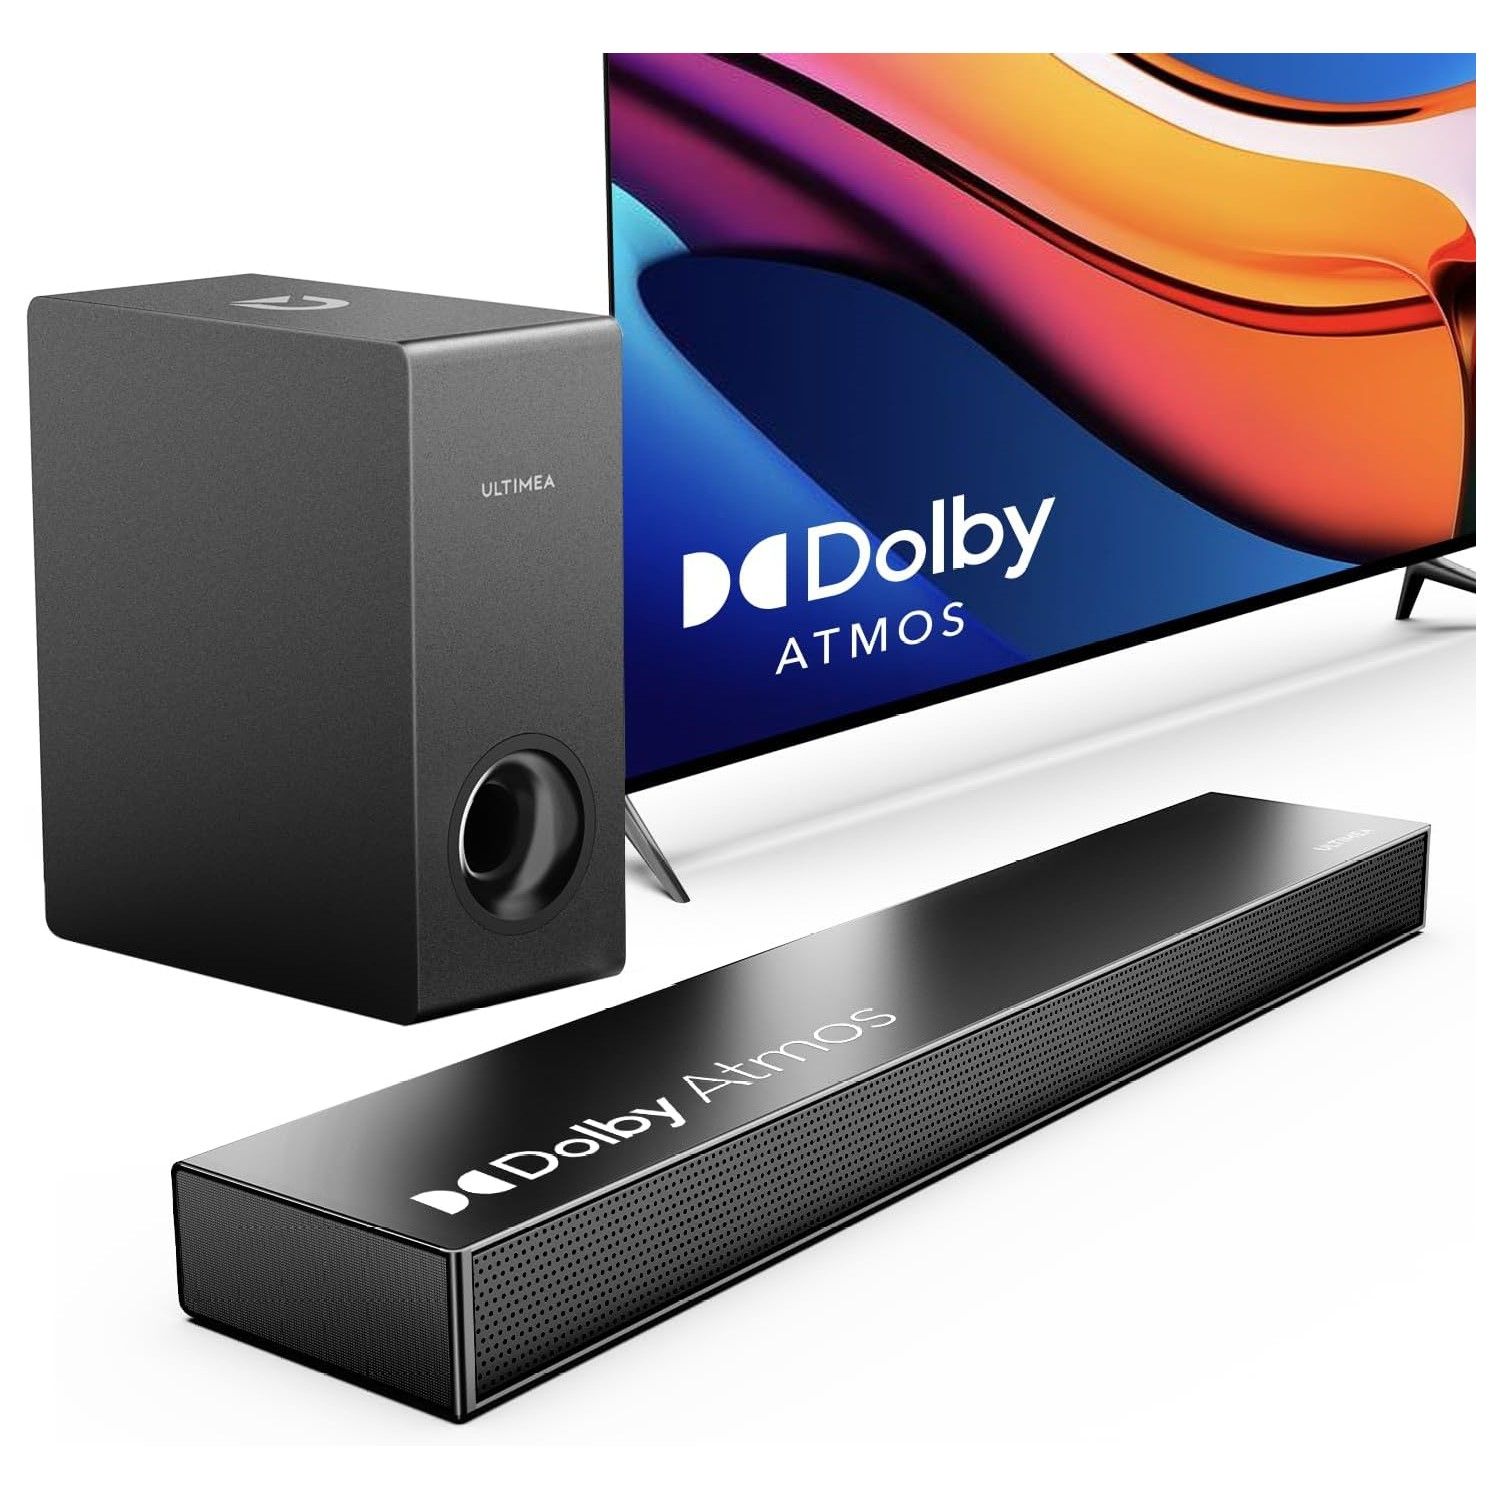 ULTIMEA Nova S50 Dolby Atmos SoundBar